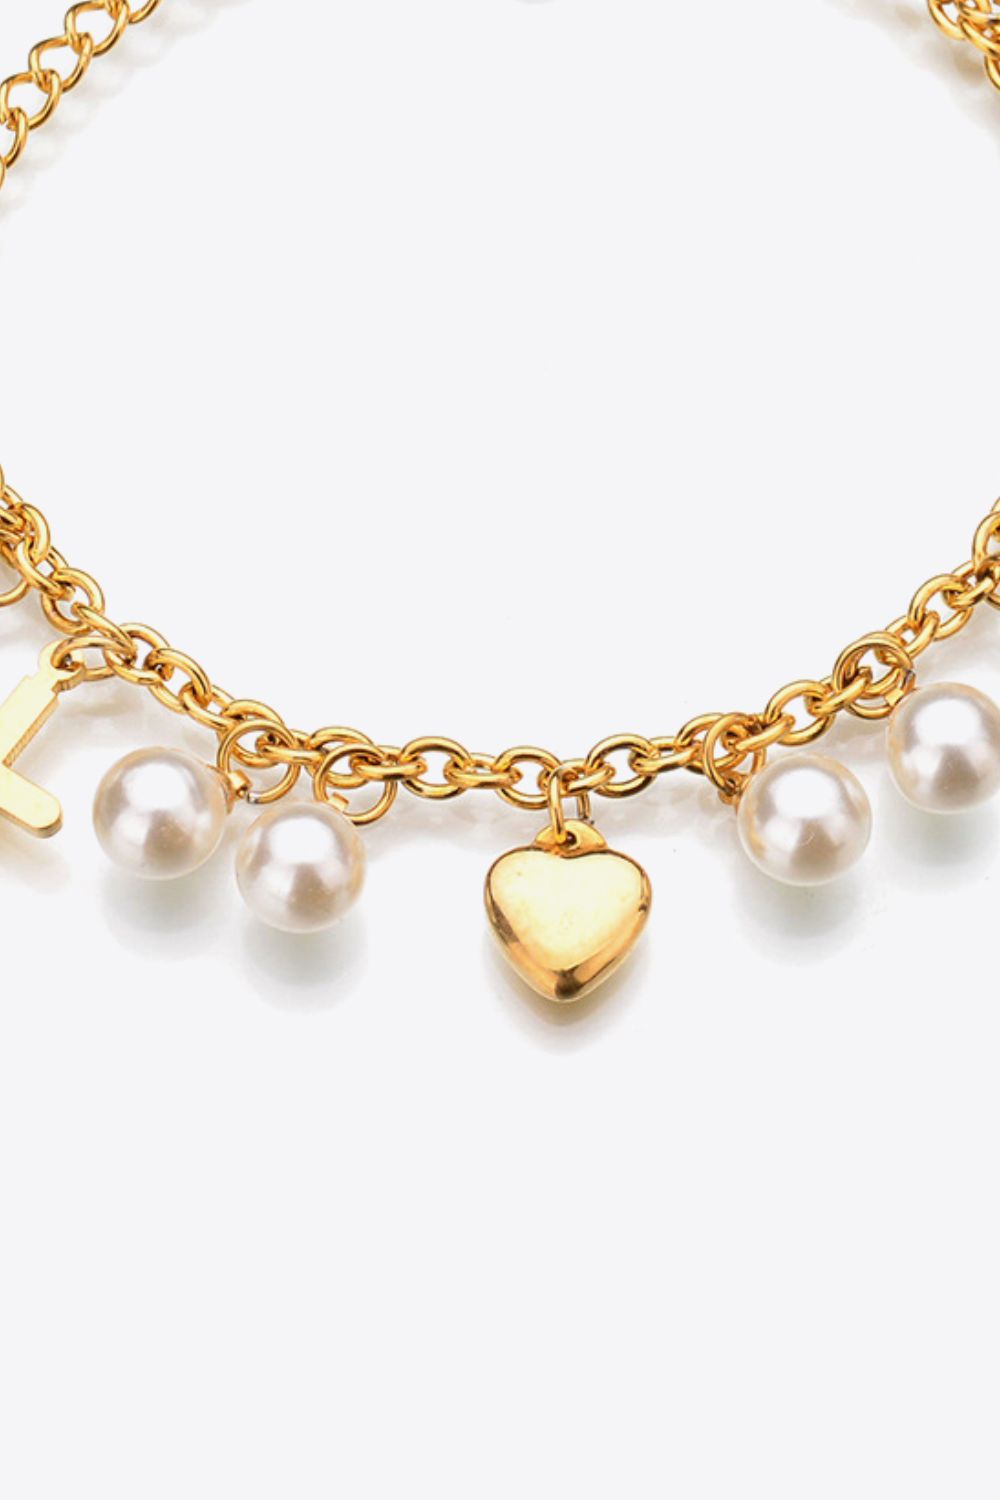 HK Heart Cross and Pearl Charm Stainless Steel Bracelet